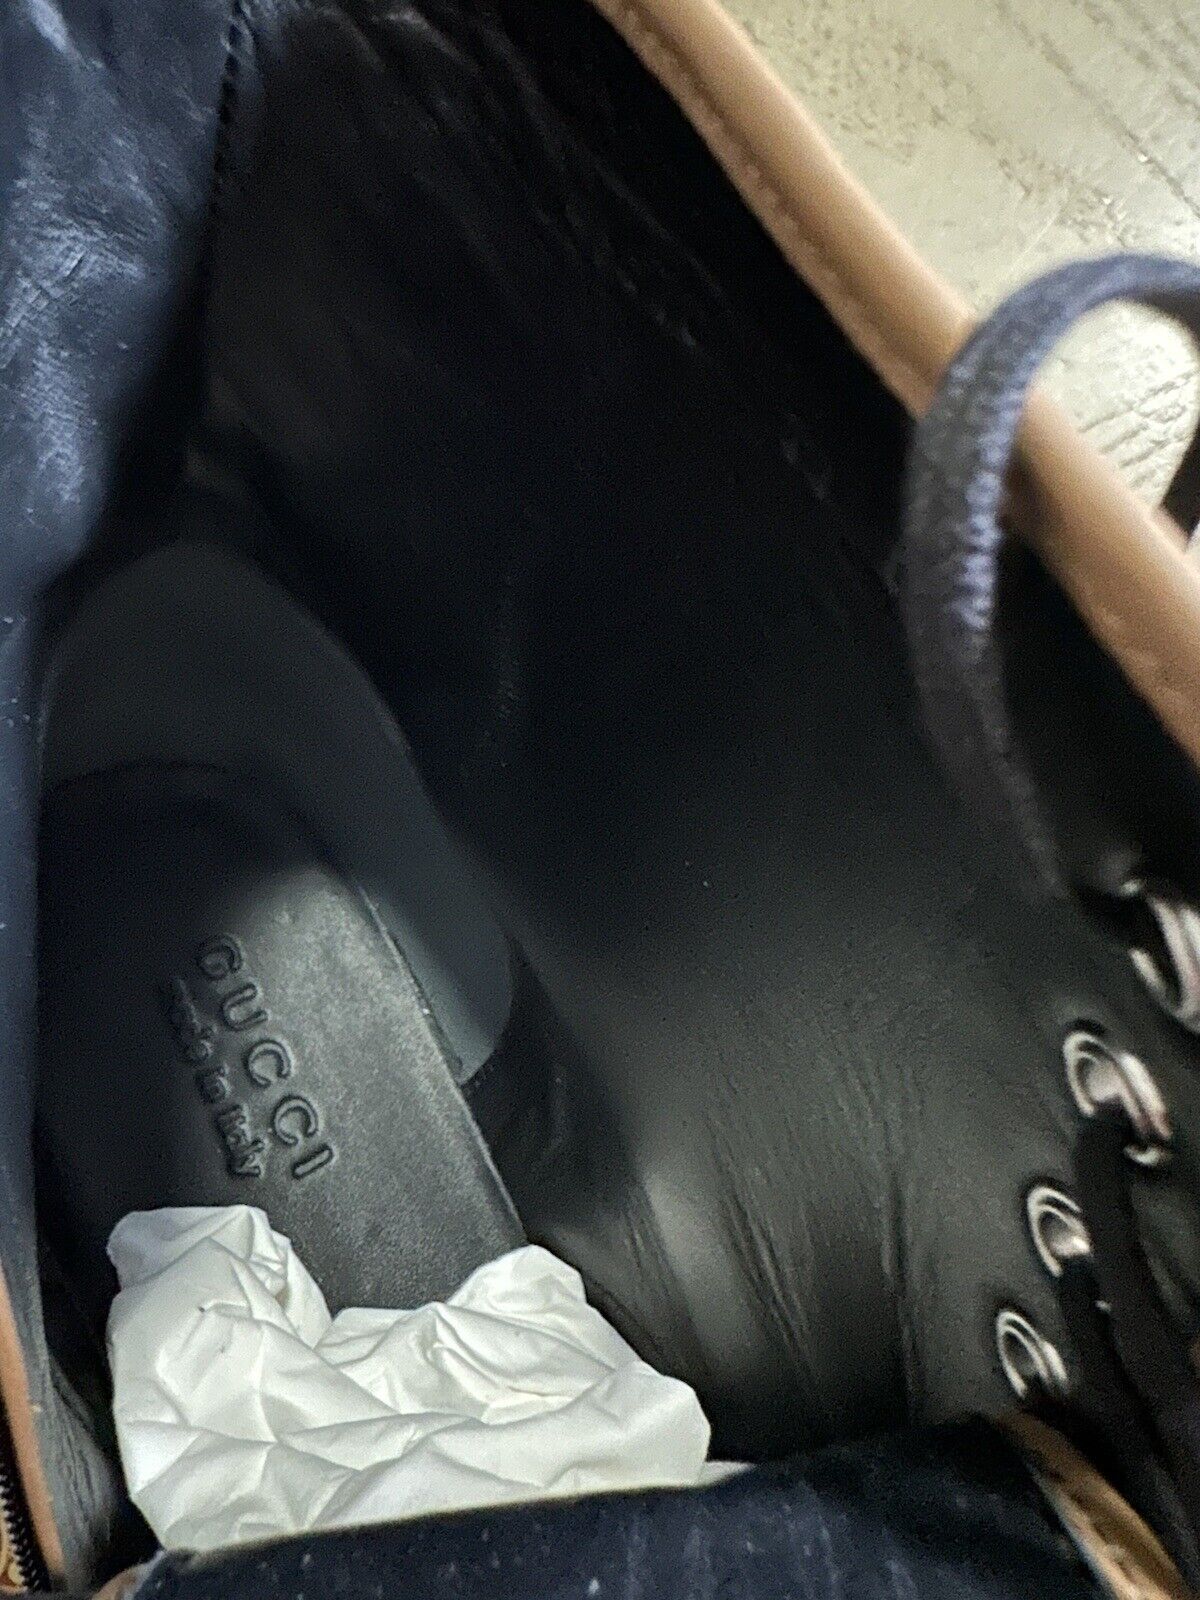 NIB Gucci Men GG Logo Canvas/Leather Boots Shoes Black/Beige 8 US/7 UK 699970